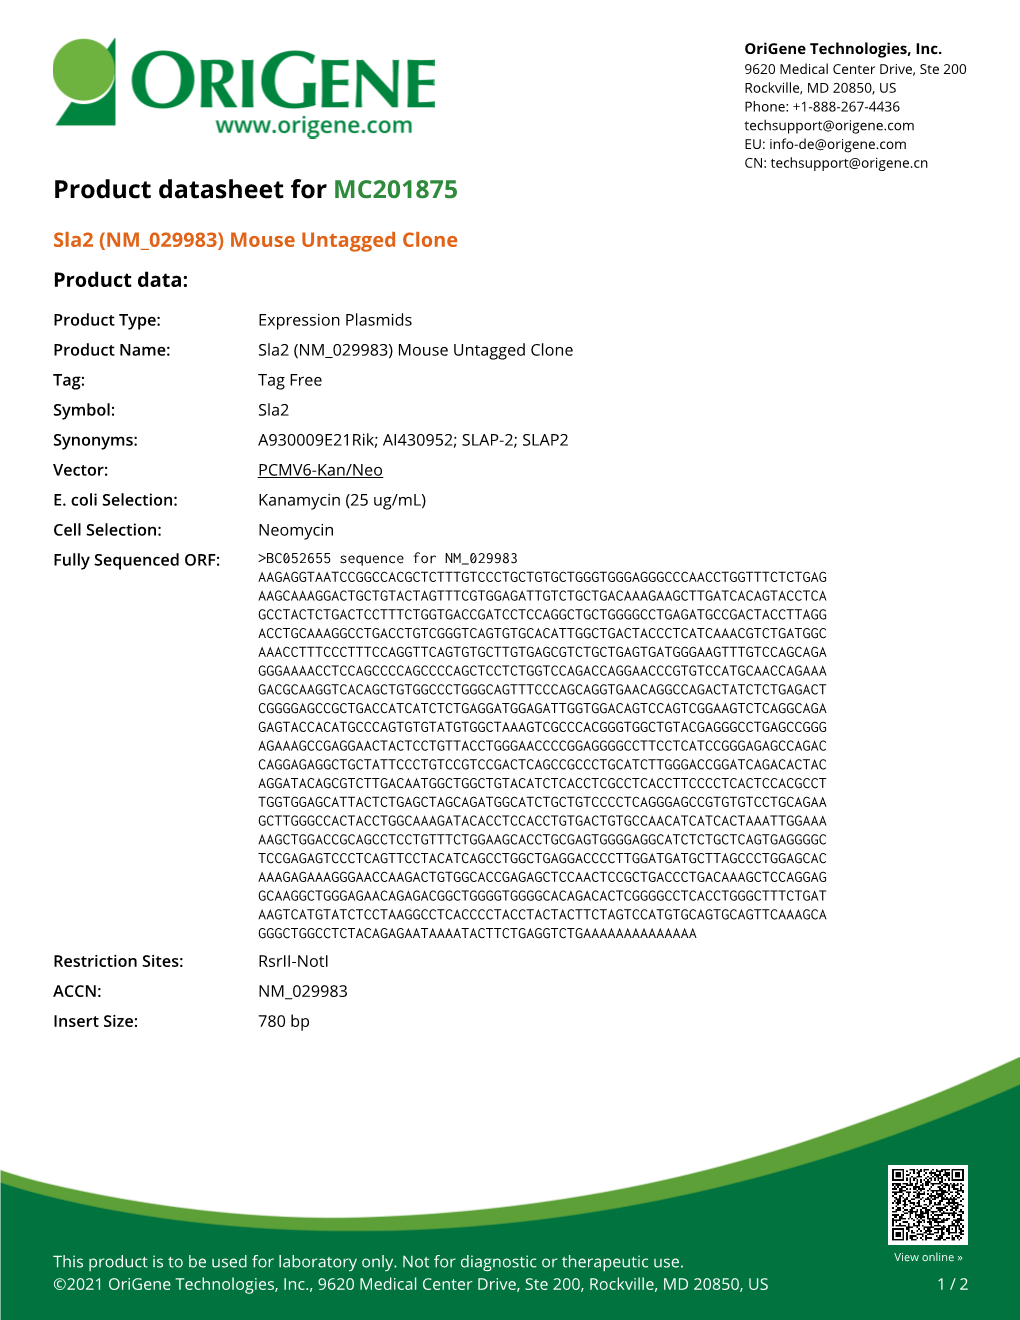 Sla2 (NM 029983) Mouse Untagged Clone – MC201875 | Origene